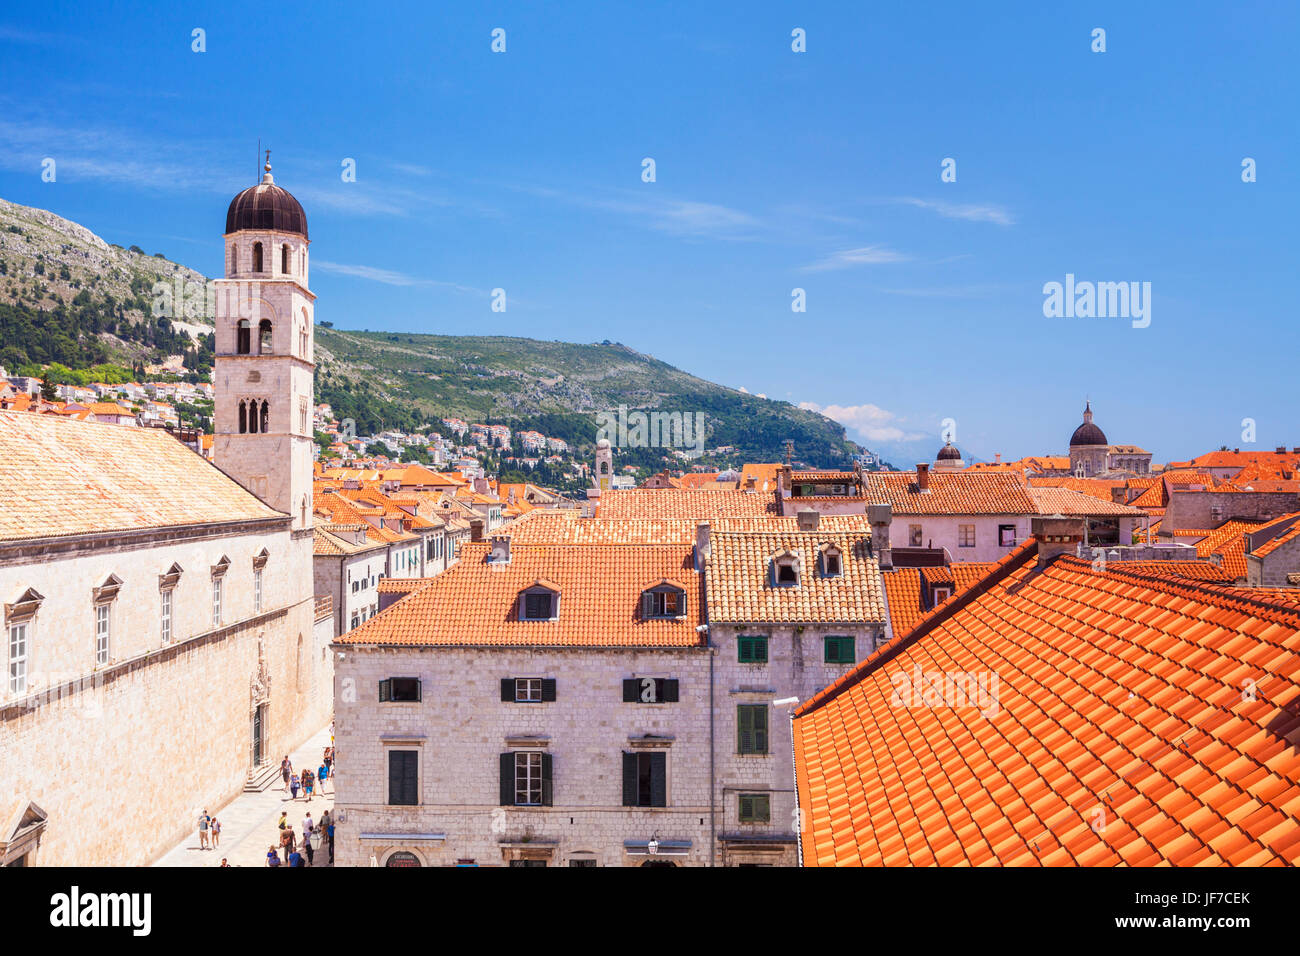 Dálmata de Croacia CROATIA Dubrovnik casco antiguo de Dubrovnik Dubrovnik tejados de tejas rojas viejas casas blue sky casco antiguo de Dubrovnik Croacia Europa Foto de stock